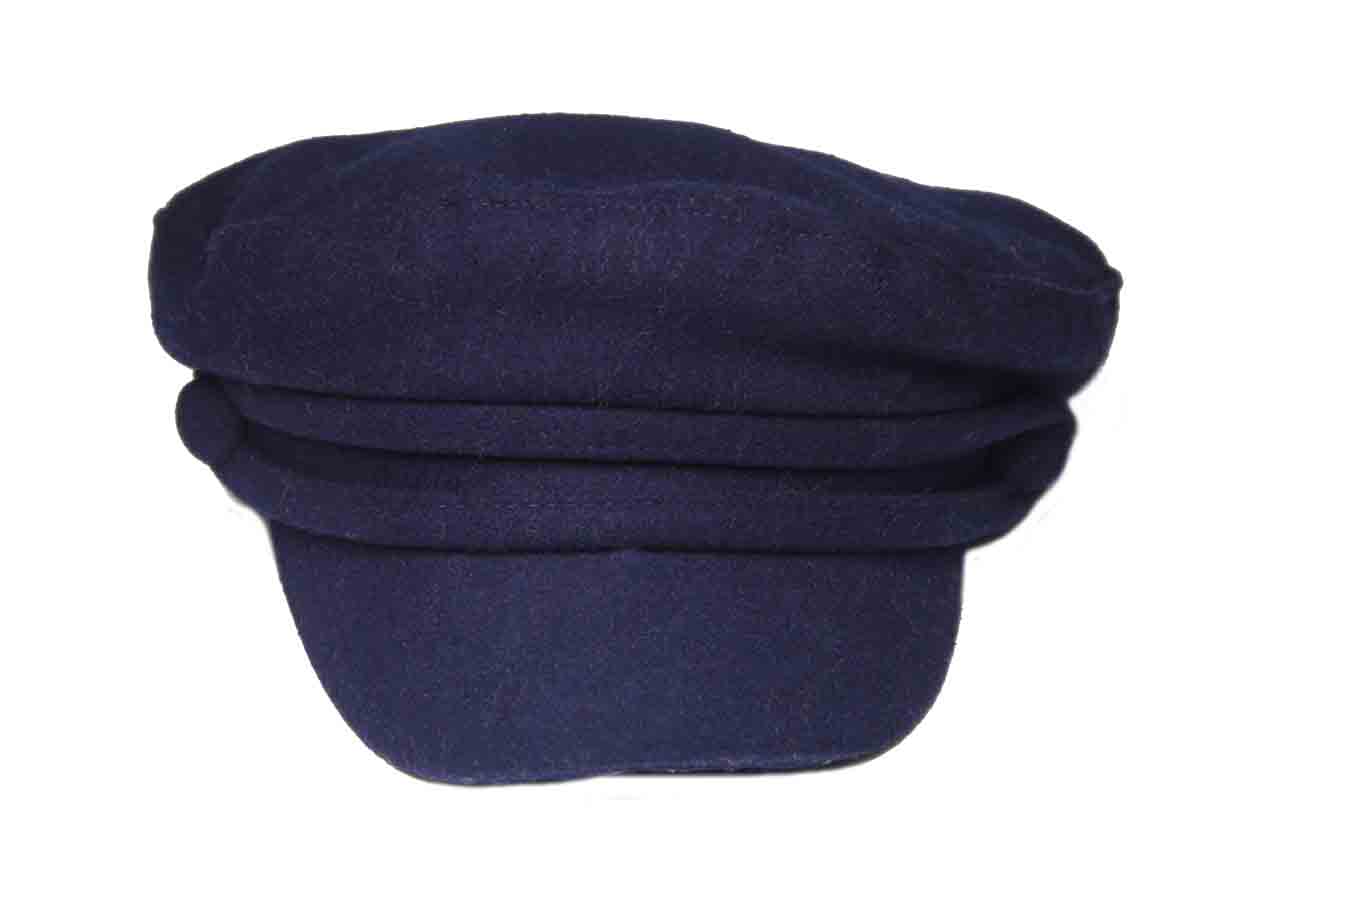 Zara Green Fisherman's Hat Cap Navy Blue Wool Blend Men's Size Small